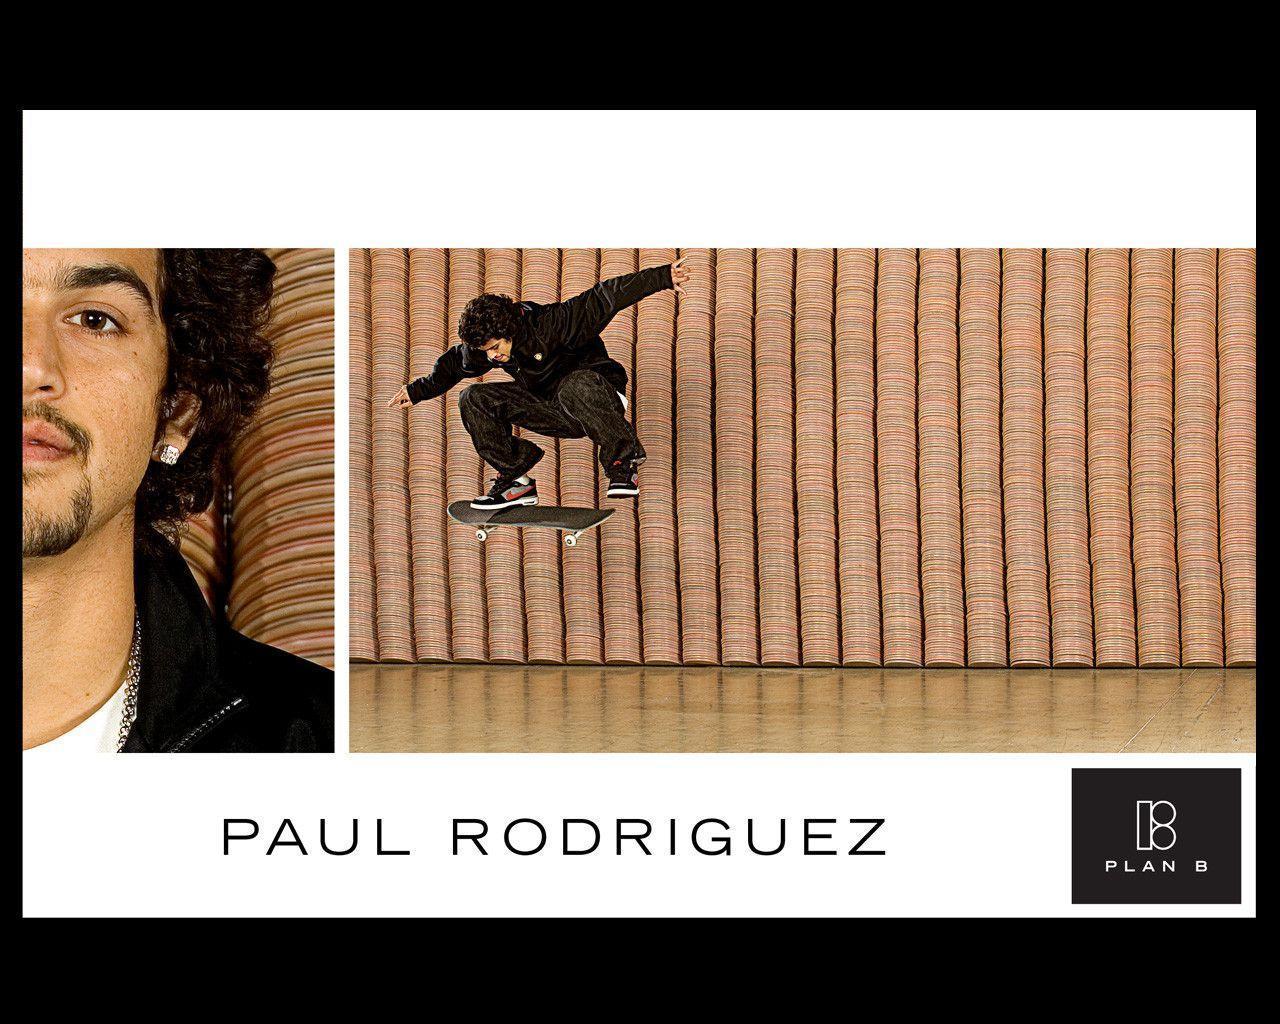 Paul Rodriguez Wallpaper